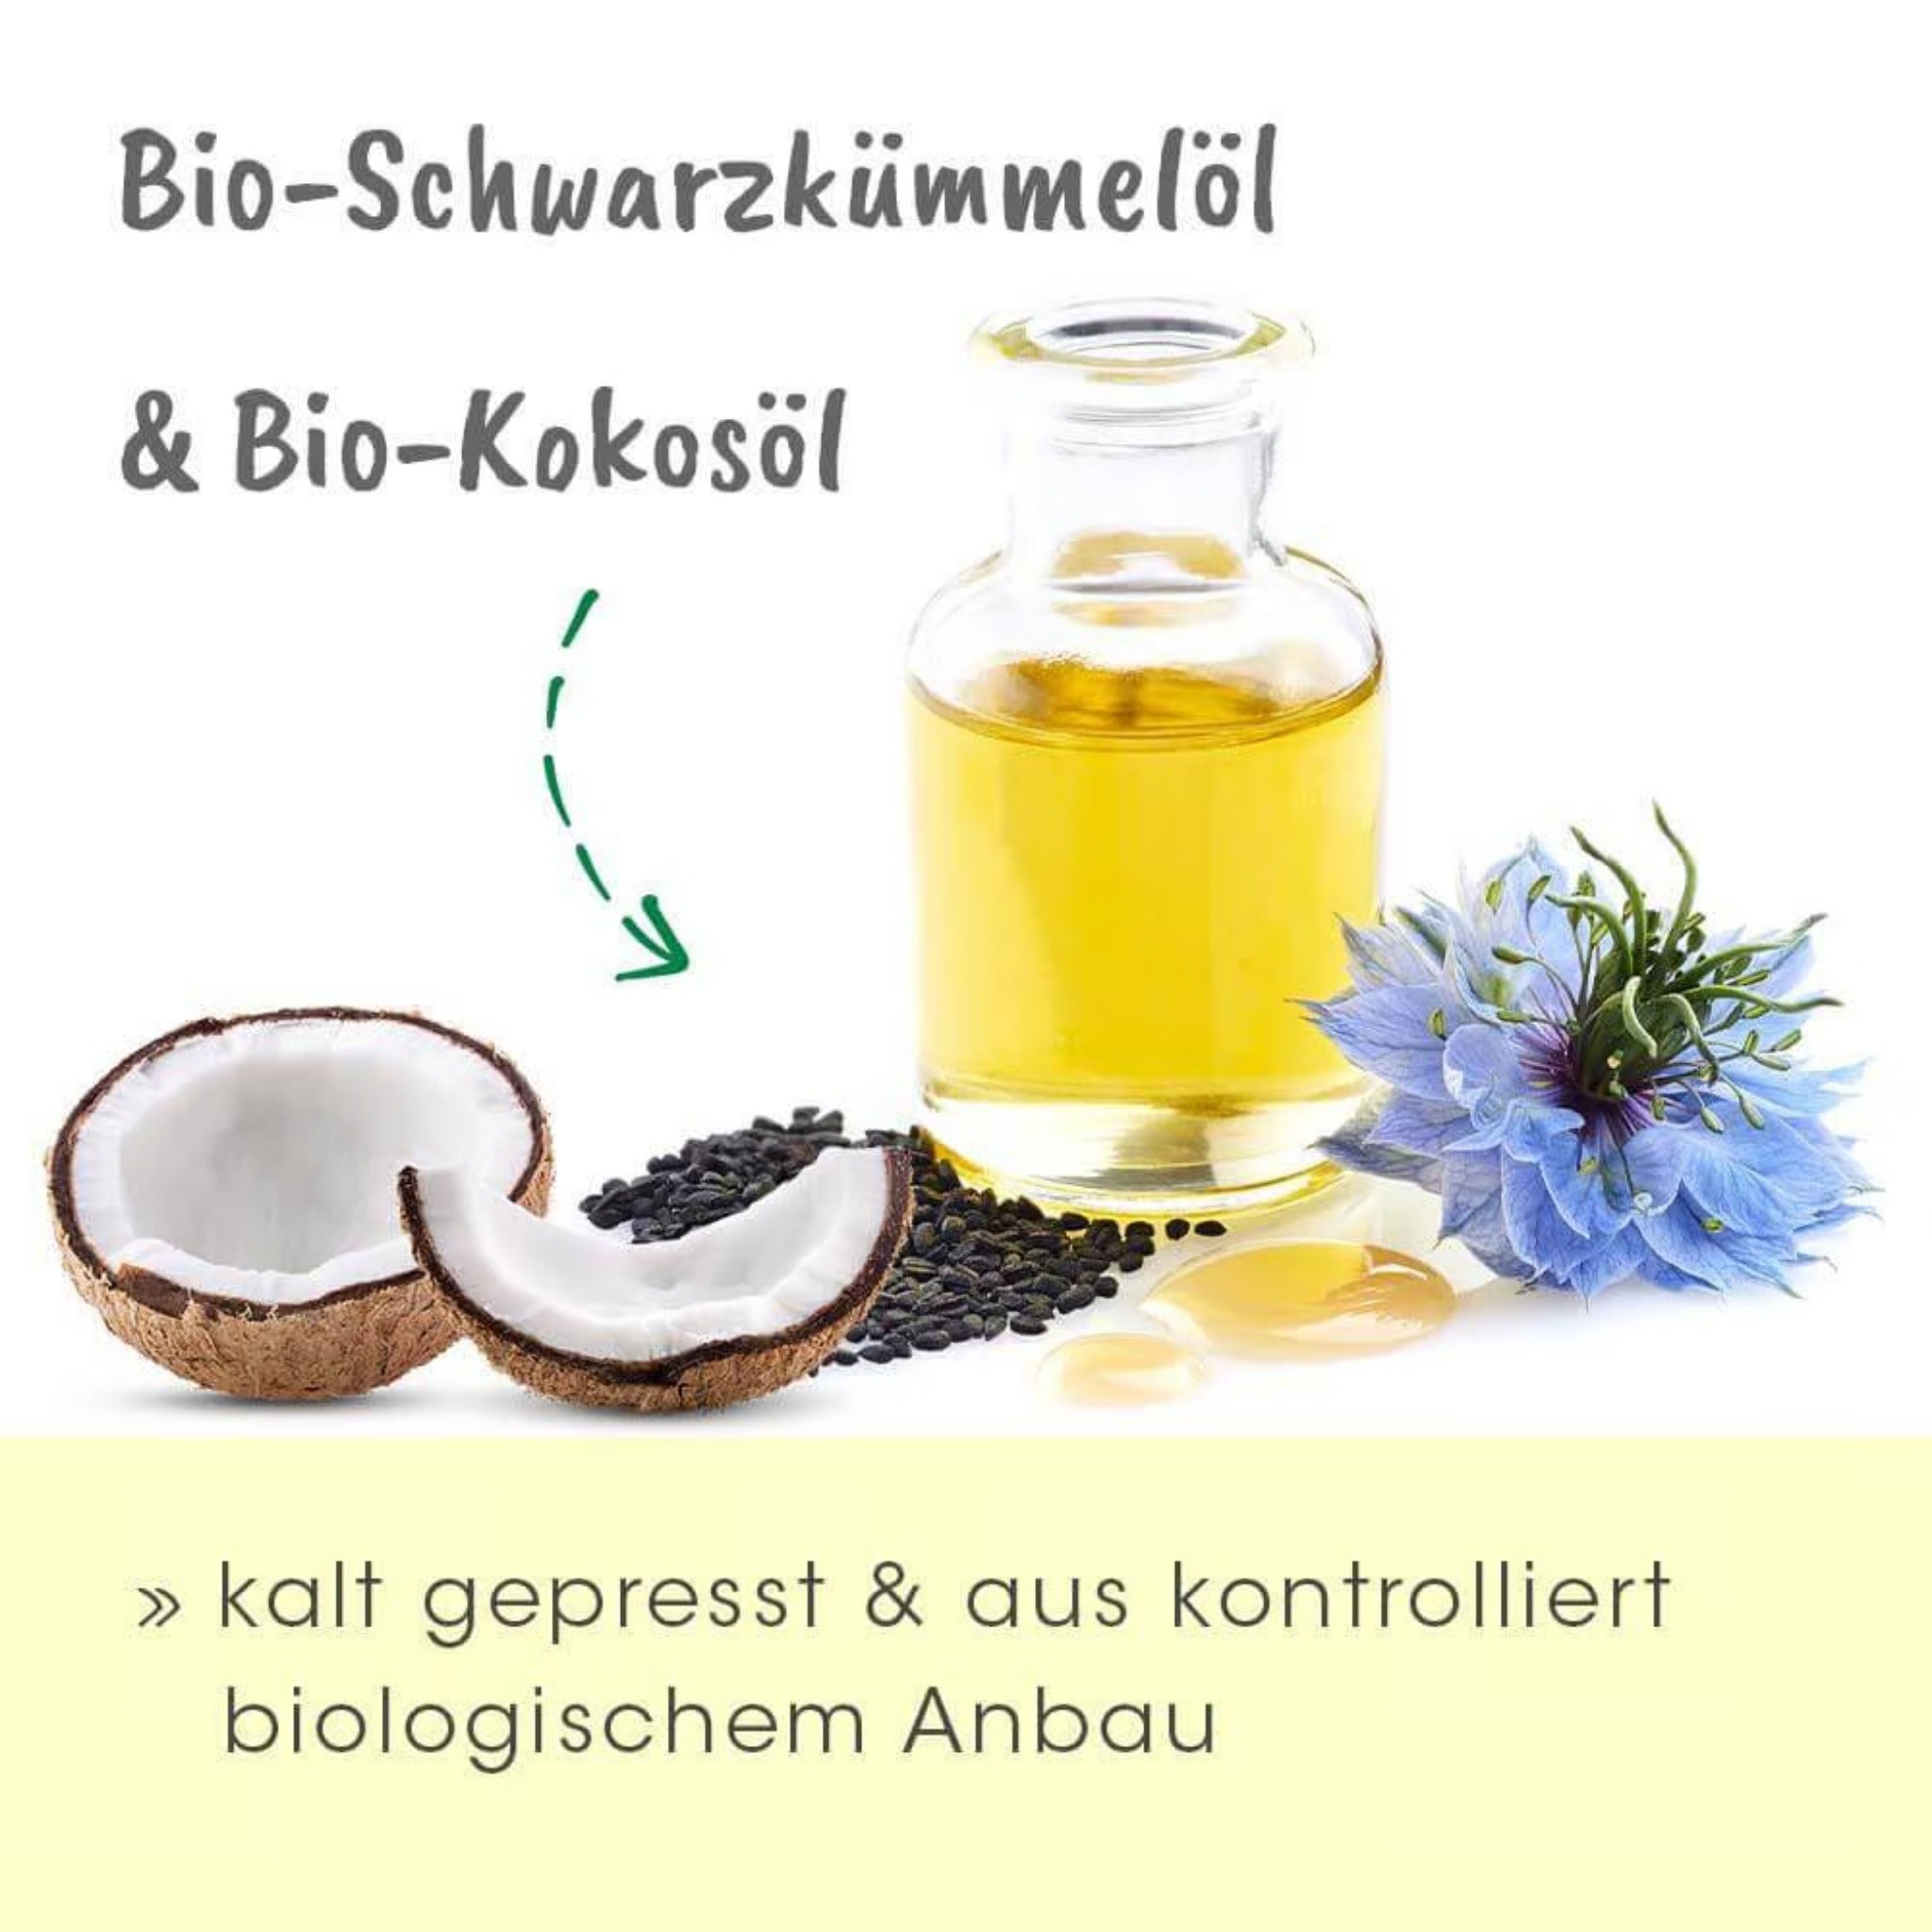 cdVet insektoVet Bio-Kokos-Schwarzkümmel-Öl - Woofshack